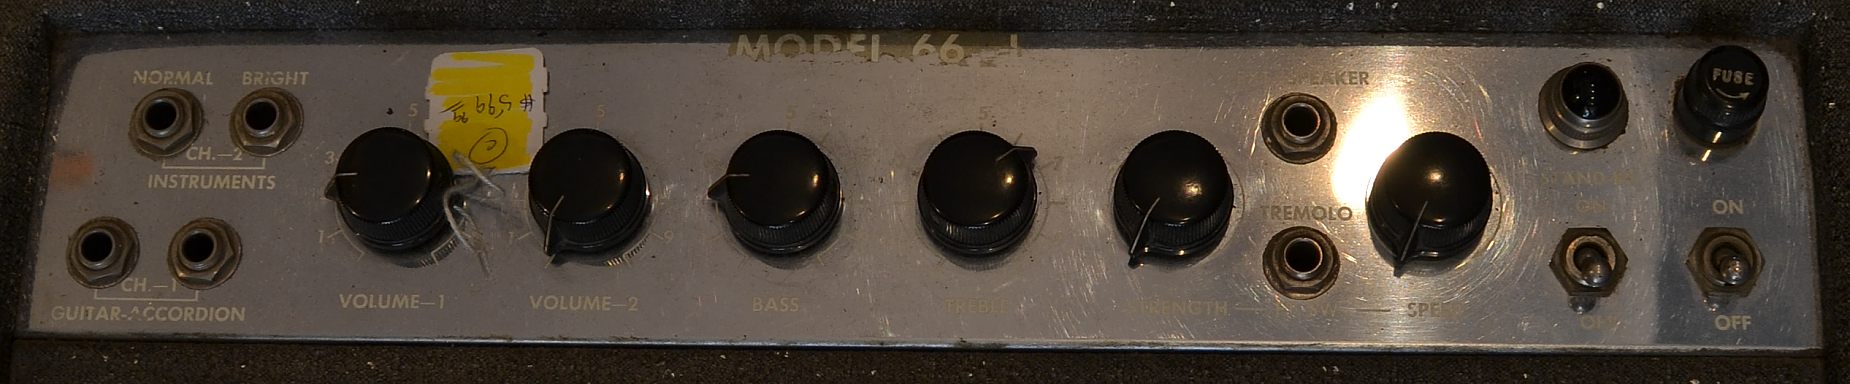 Guild_J-66 amp_1961(C)_panel